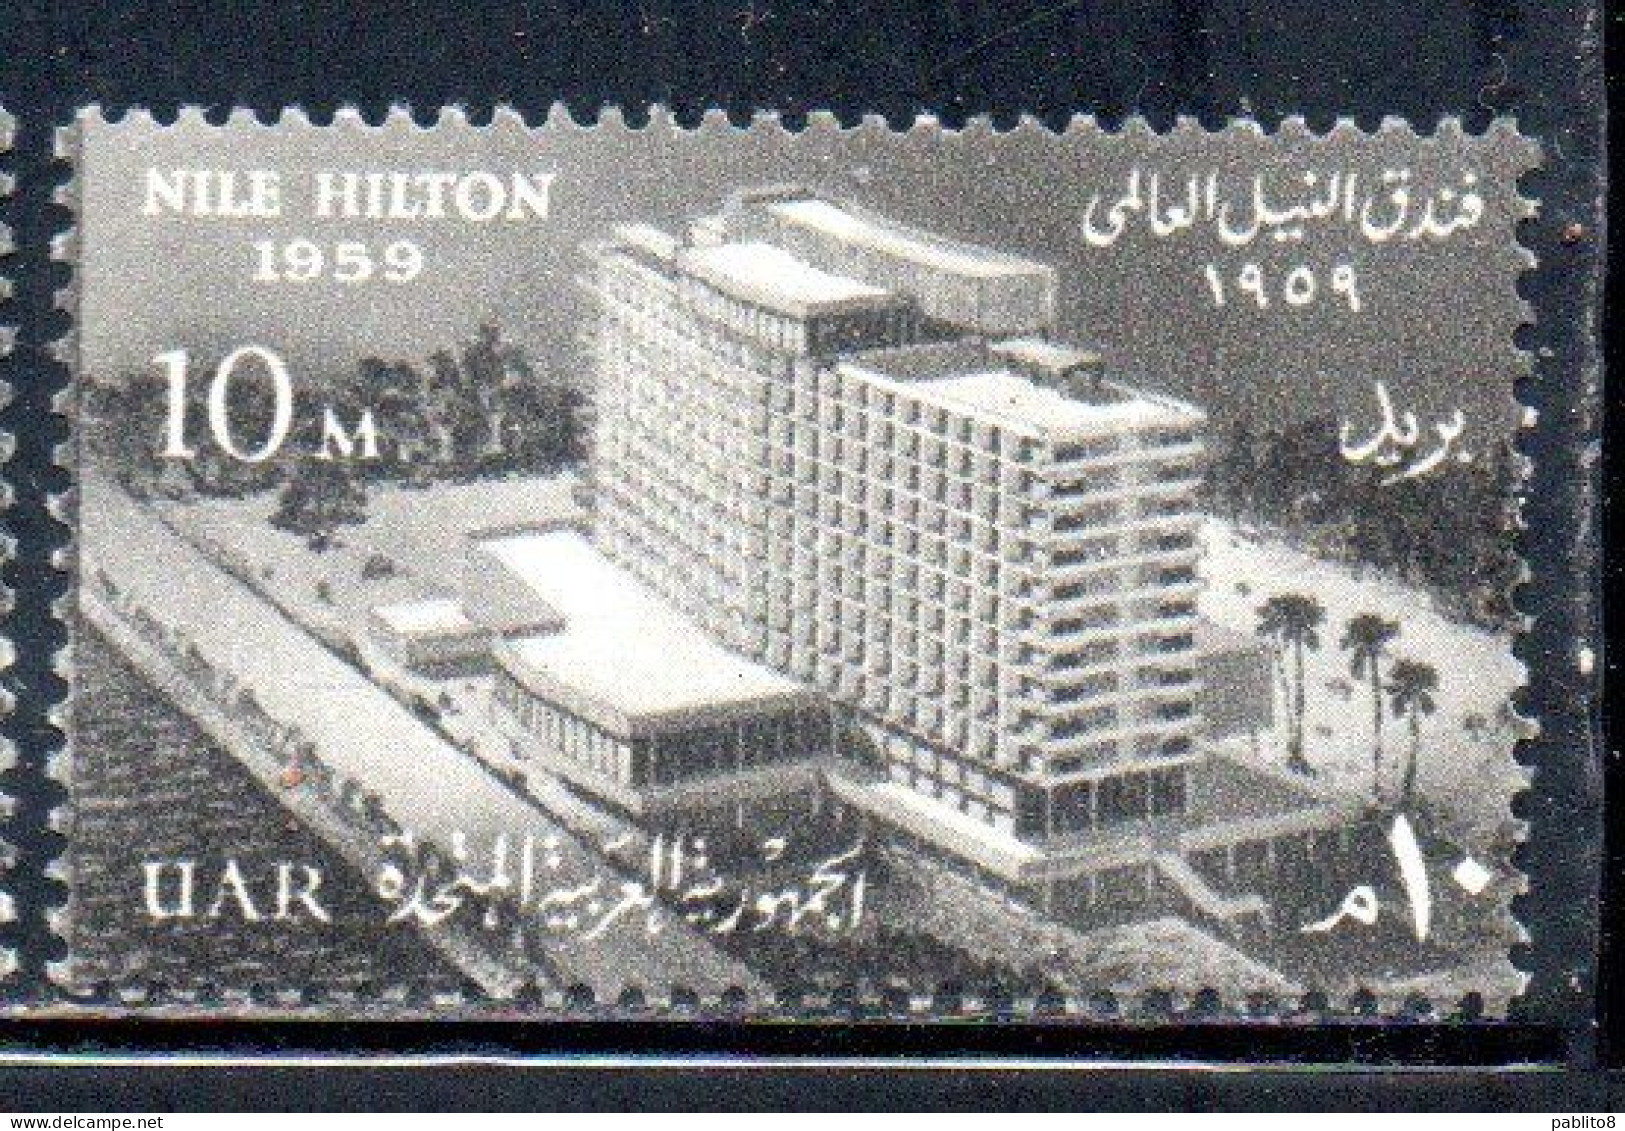 UAR EGYPT EGITTO 1959 OPENING OF THE NILE HILTON HOTEL CAIRO 10m MH - Ungebraucht